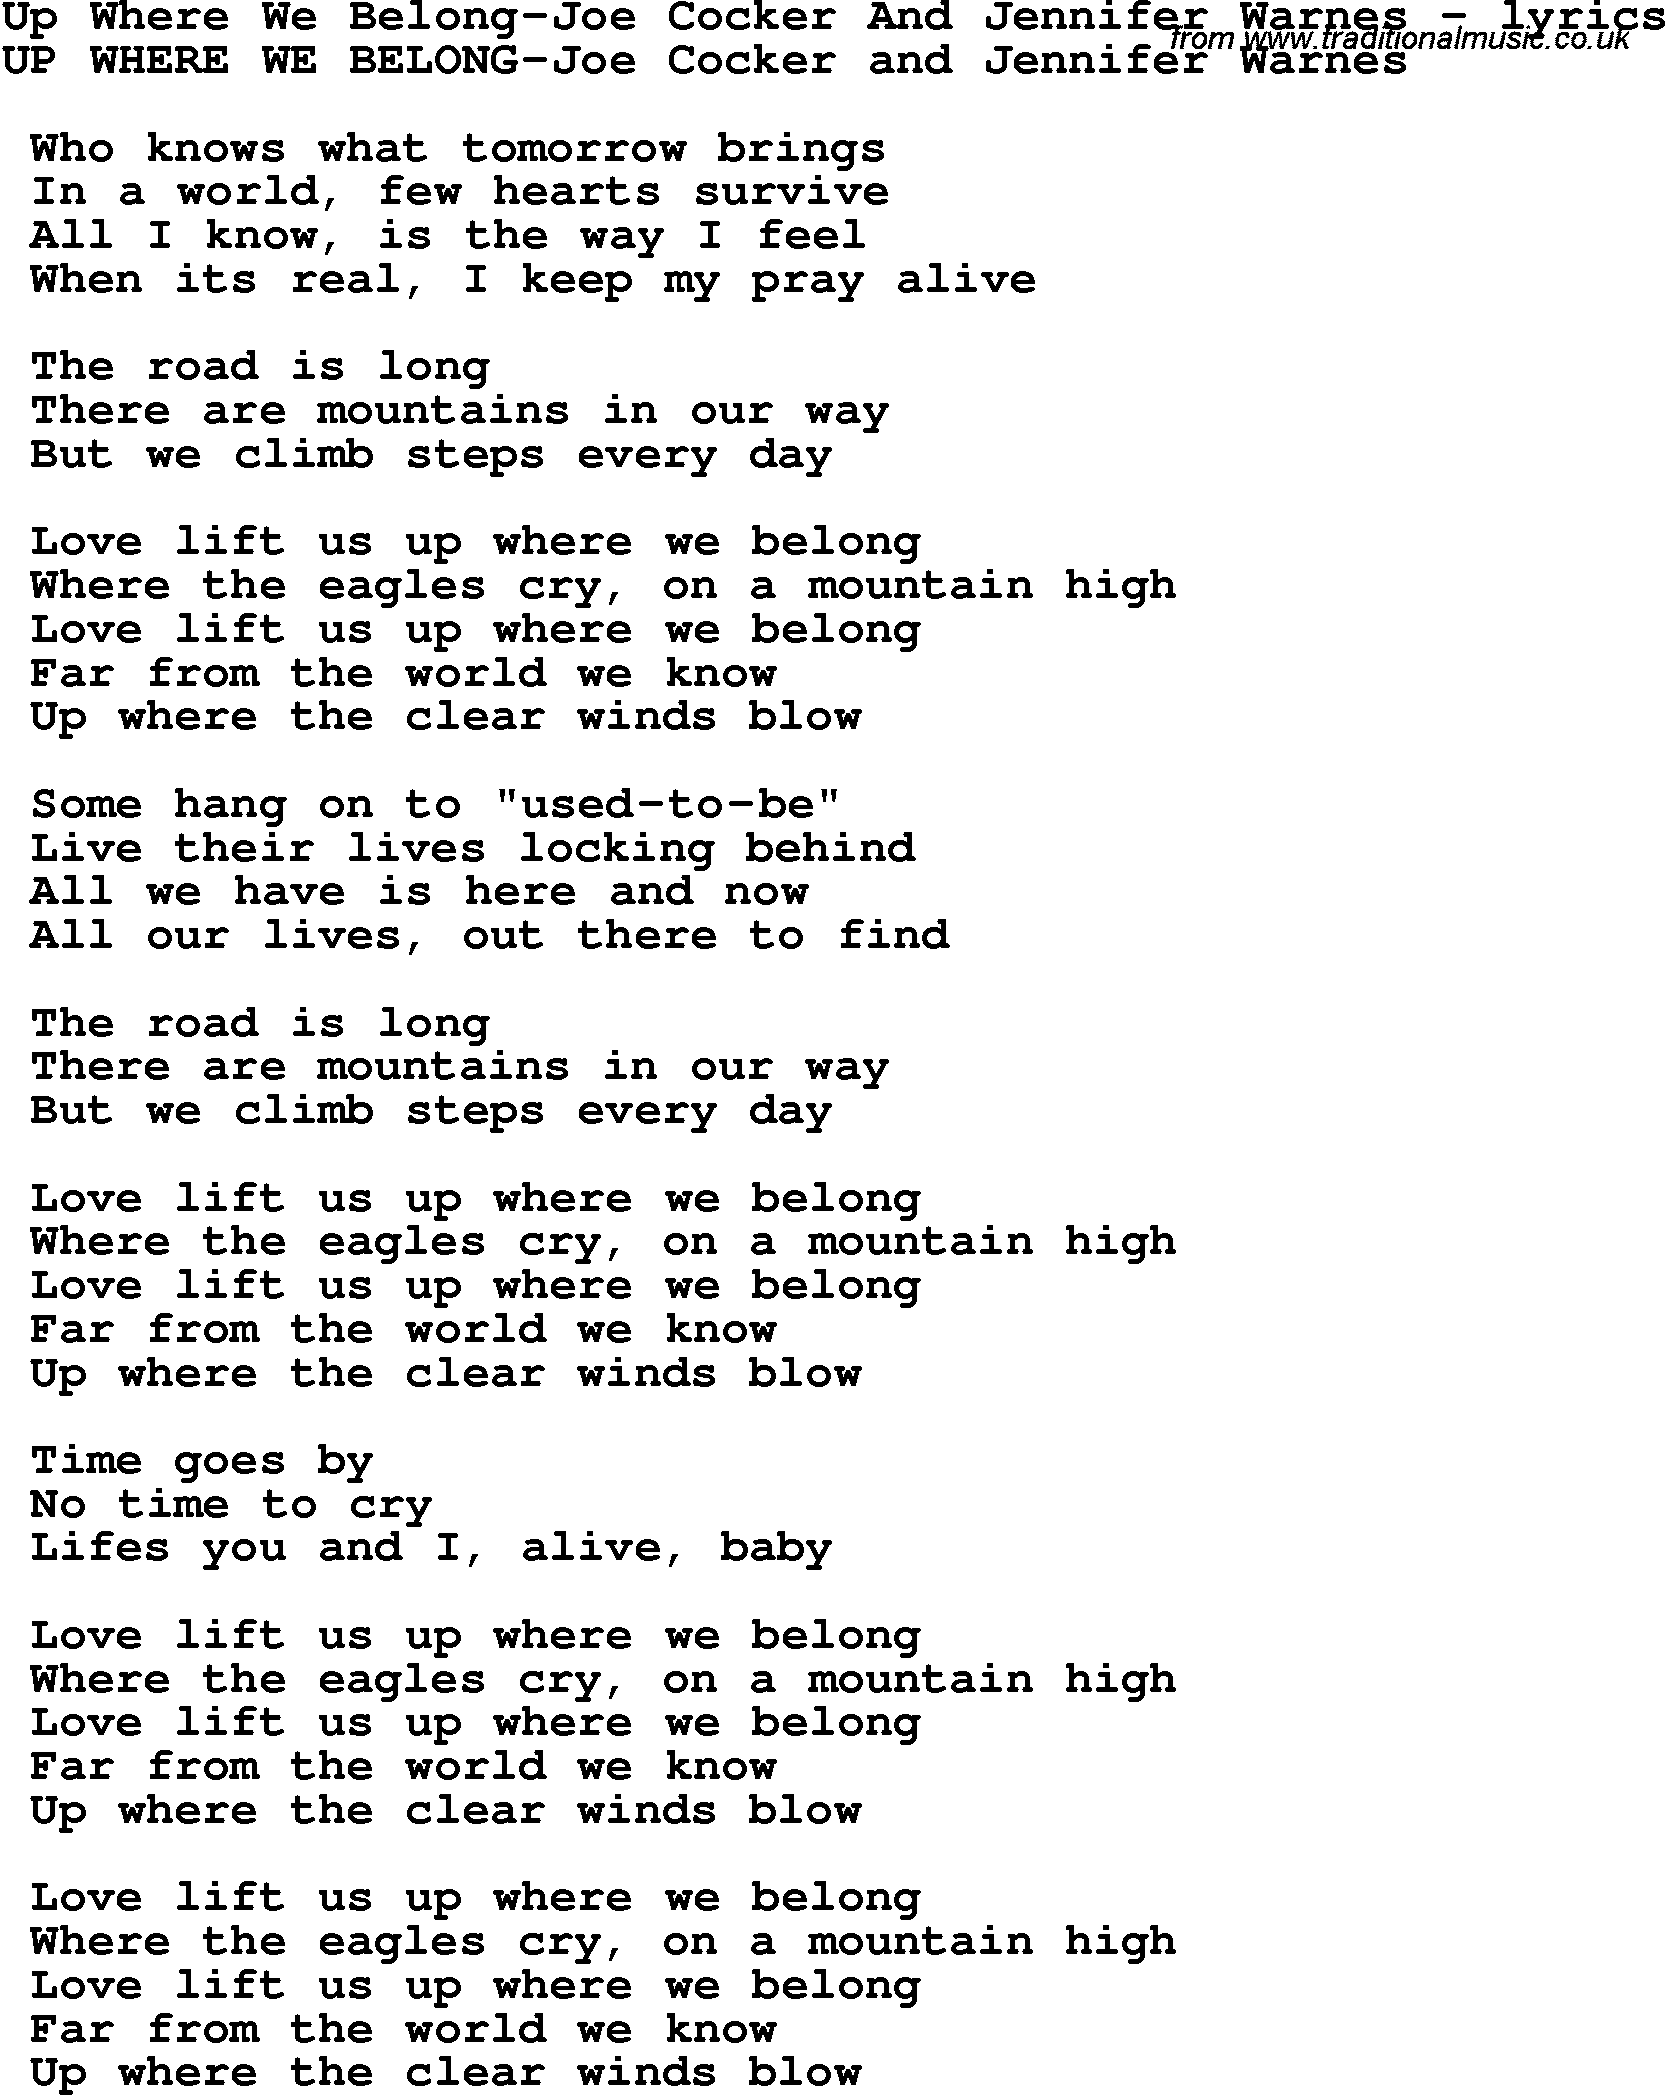 Love Song Lyrics for: Up Where We Belong-Joe Cocker And Jennifer Warnes